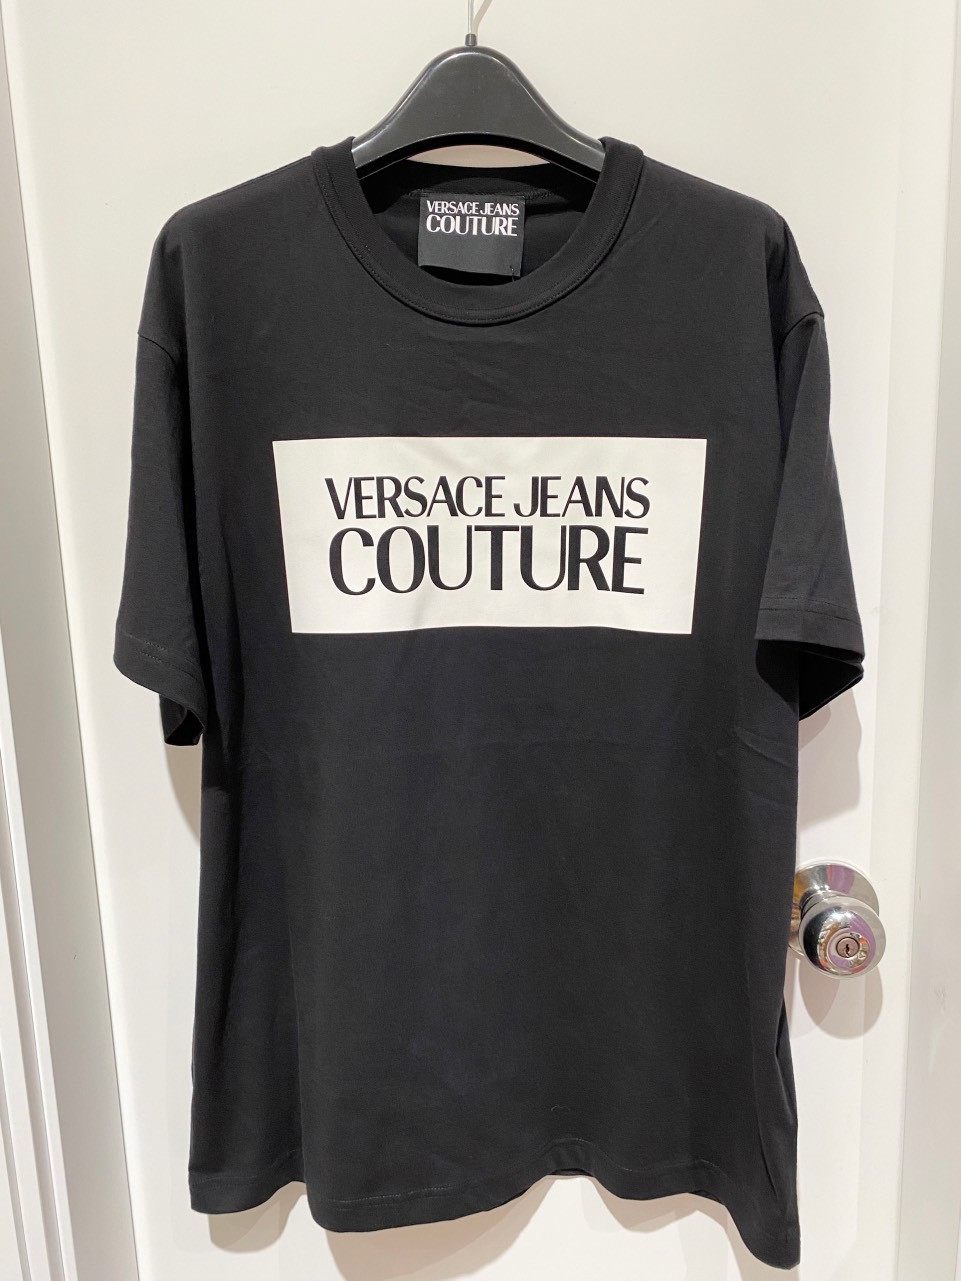 Áo Versace Jean tee over đen chữ